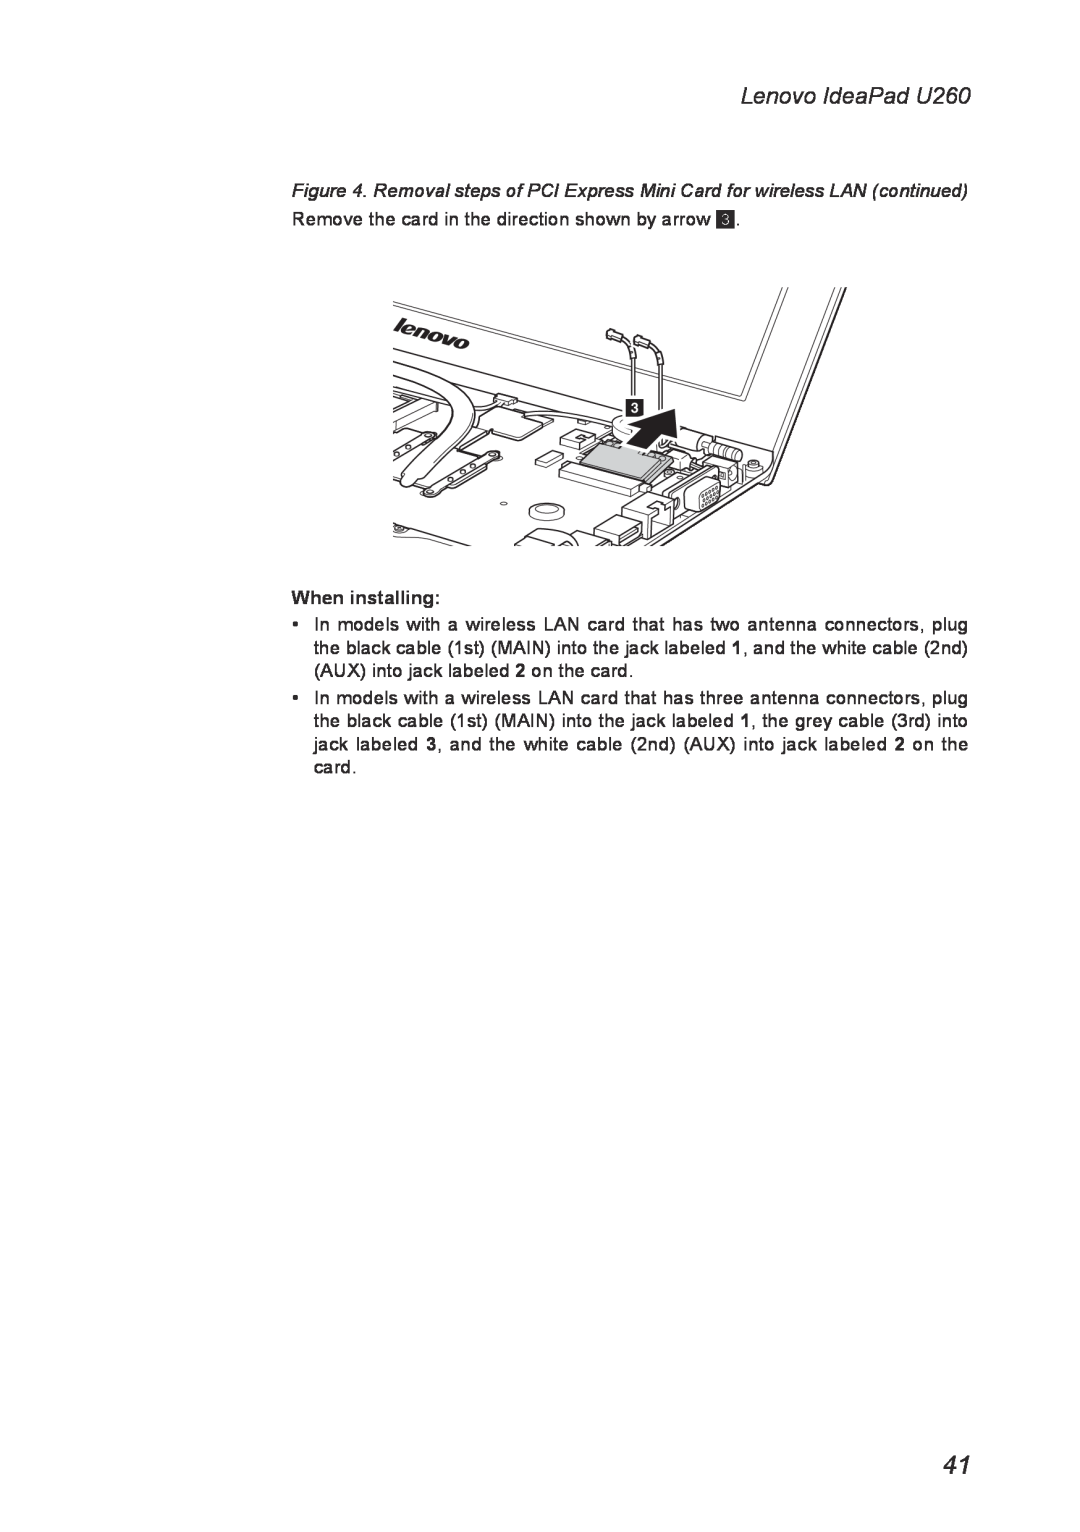 Lenovo manual When installing, Lenovo IdeaPad U260 